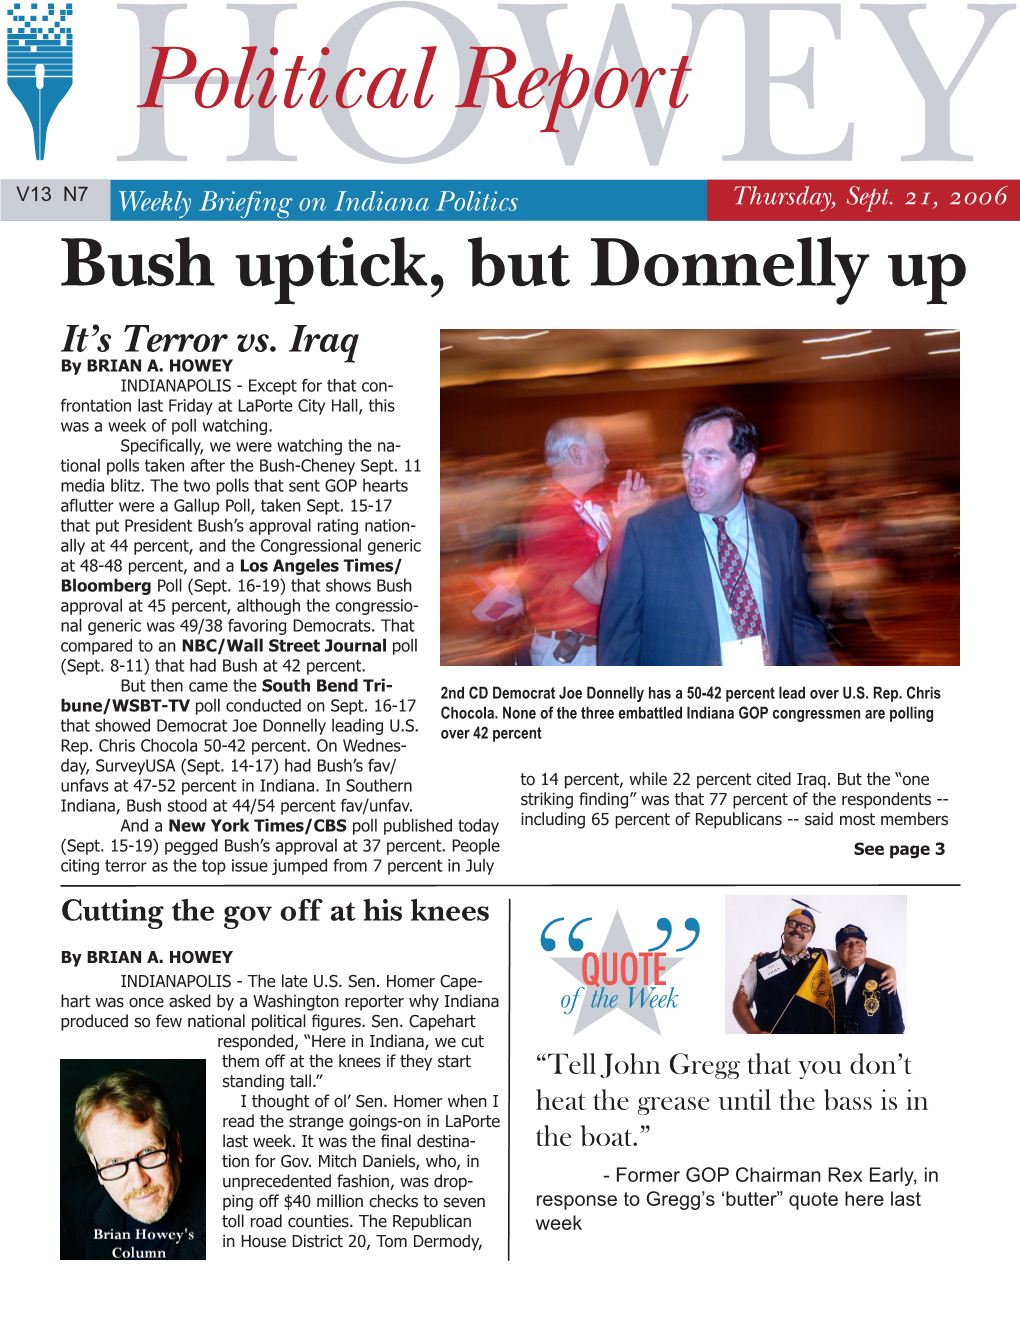 Bush Uptick, but Donnelly up It’S Terror Vs